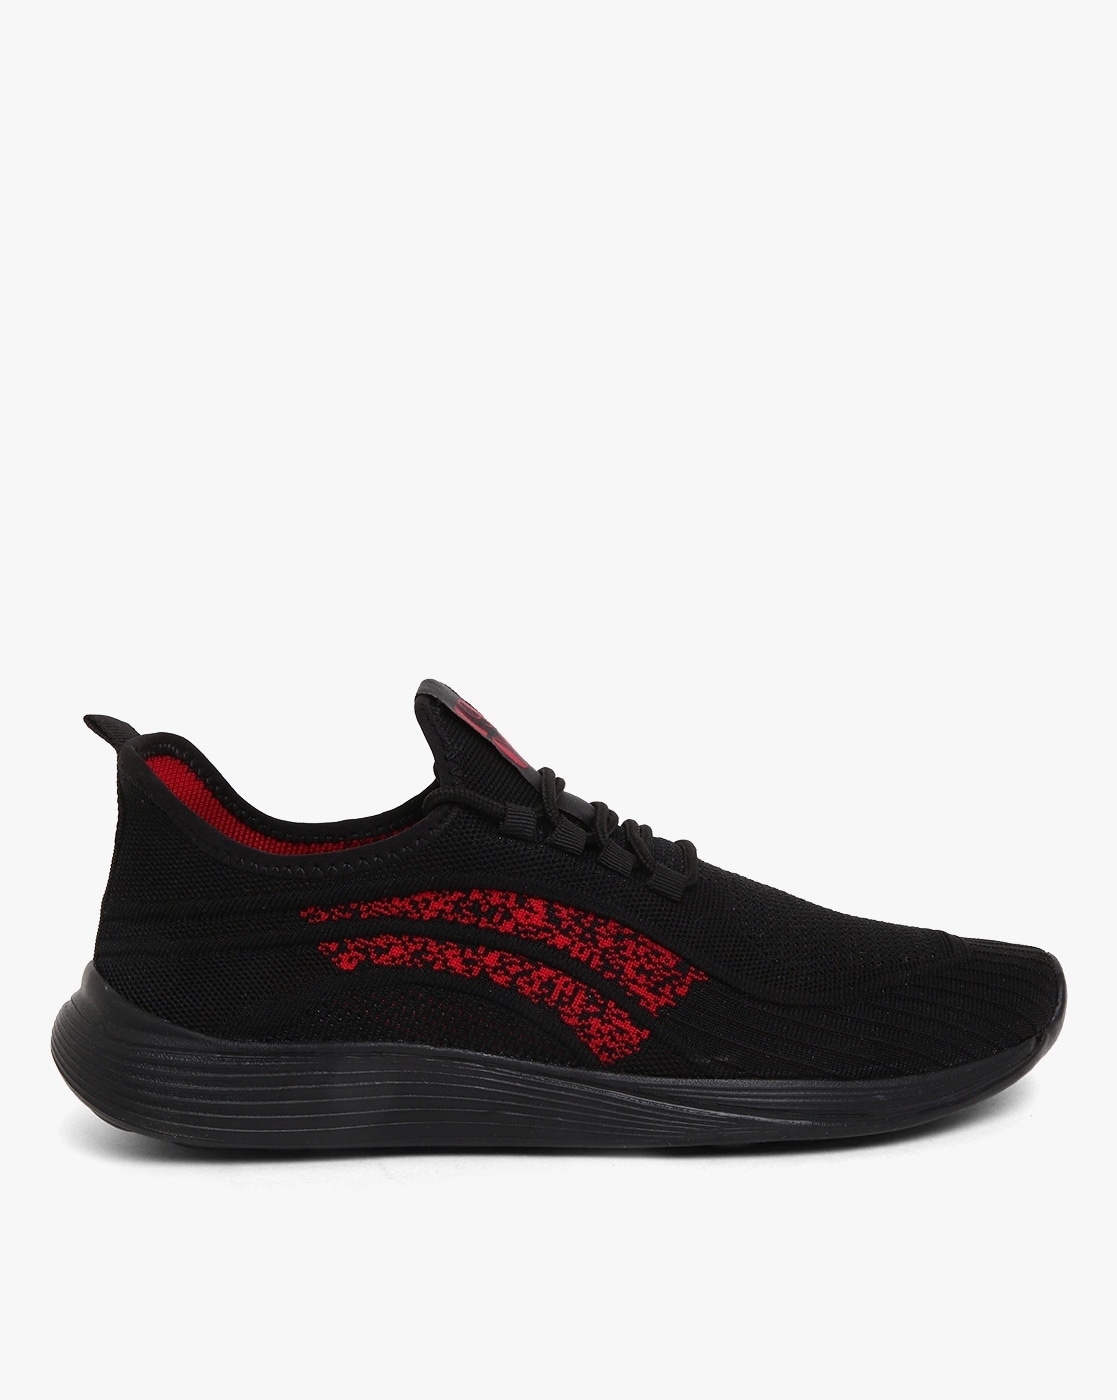 Buy Lee Cooper Men's Black Sneakers - 6 UK (40 EU) (7 US) (LC2024B1) at  Amazon.in